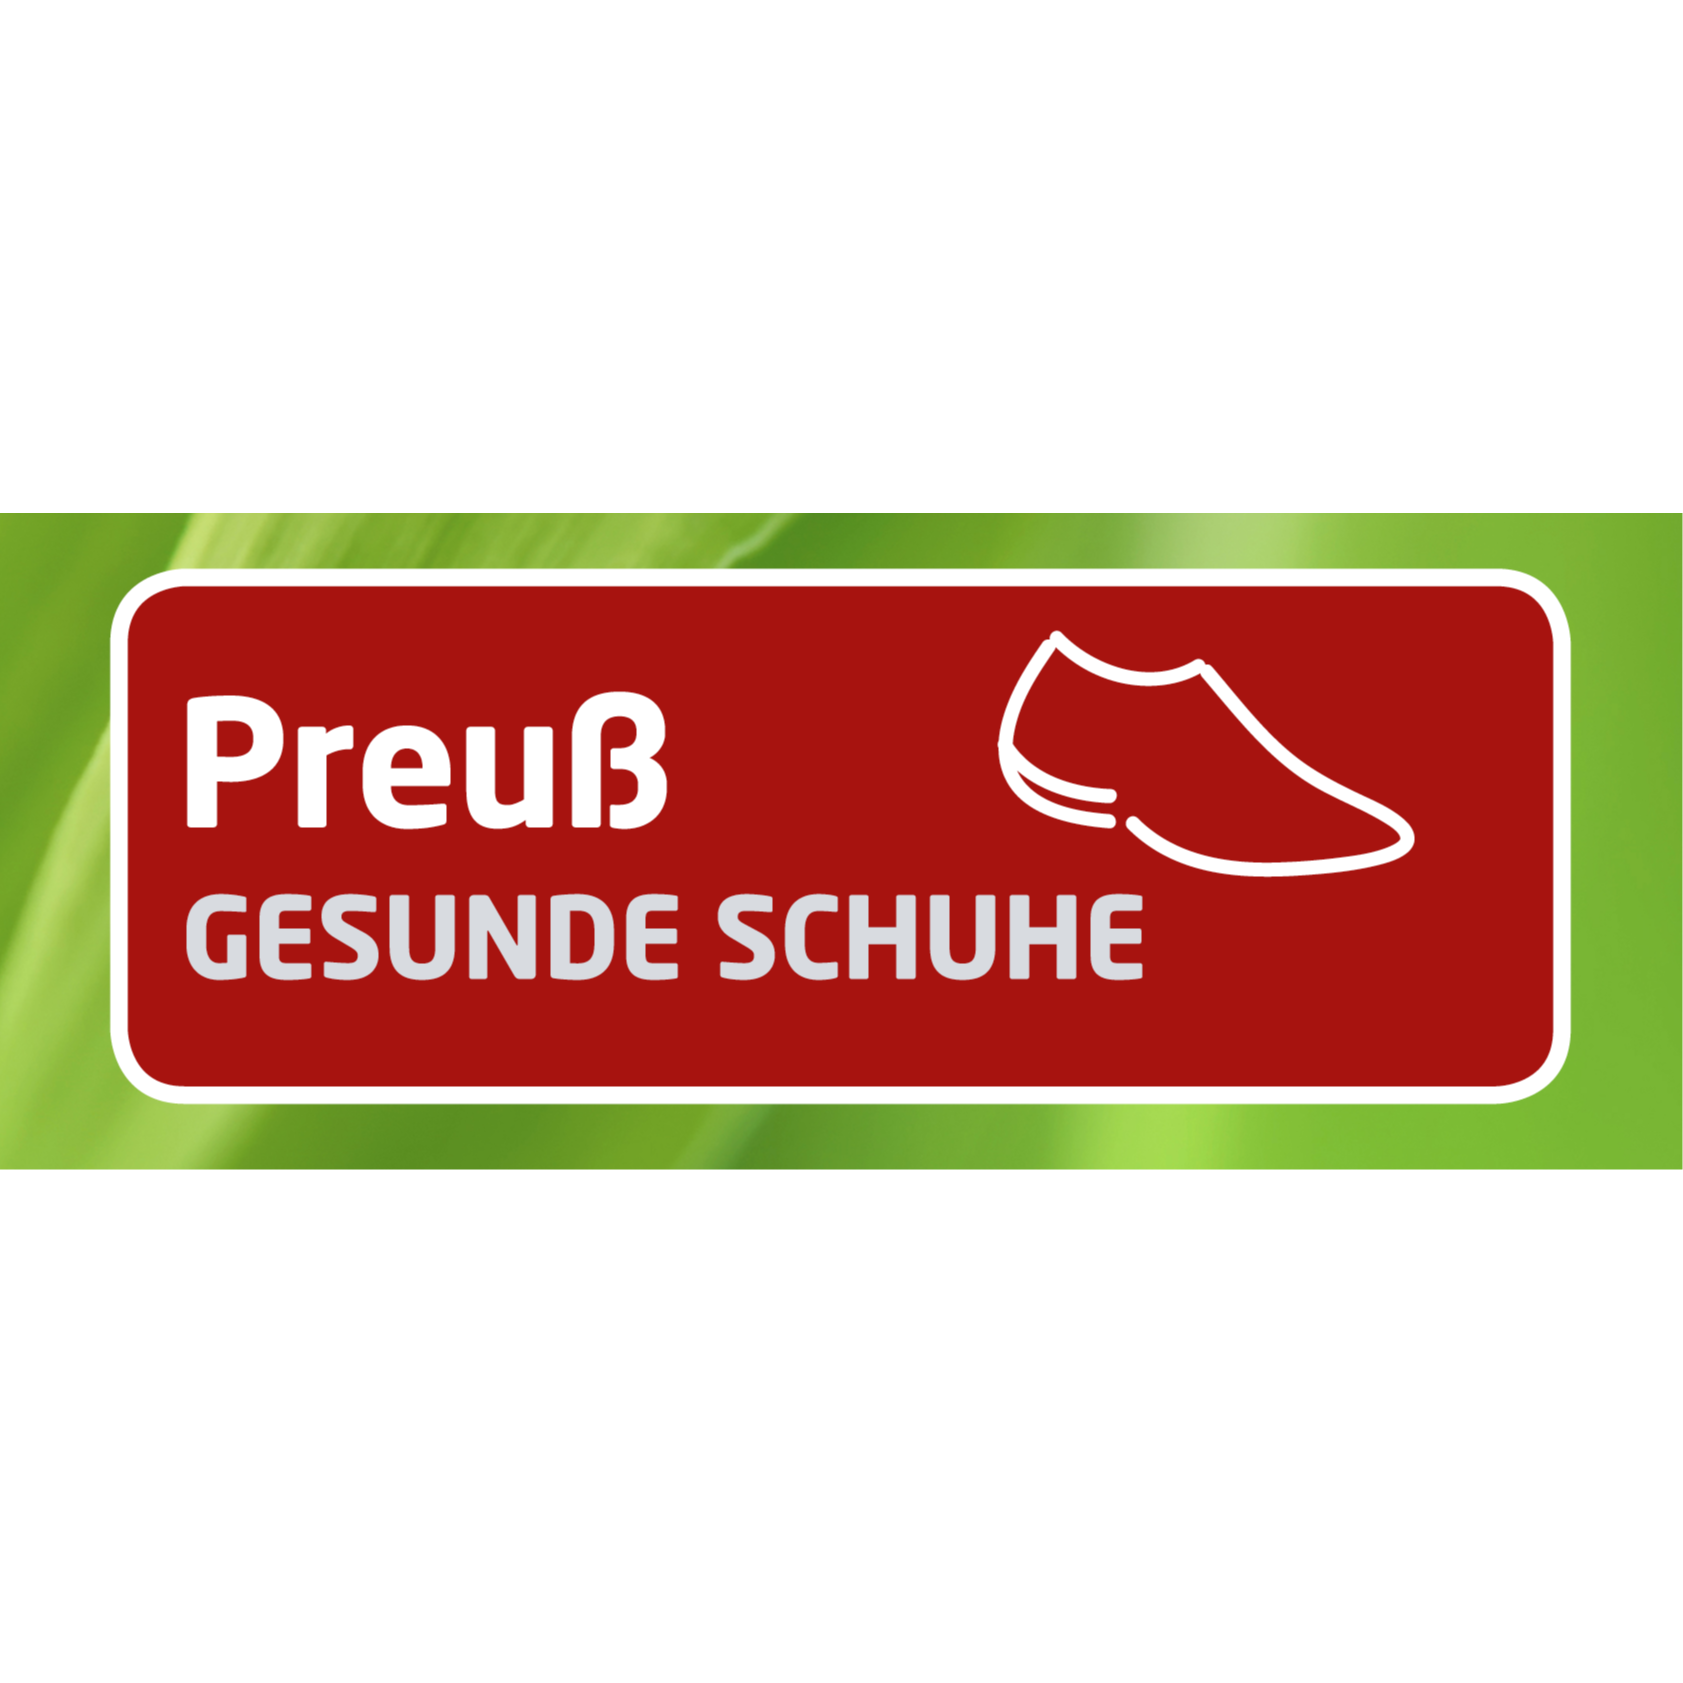 Preuß Gesunde Schuhe GmbH in Görlitz - Logo